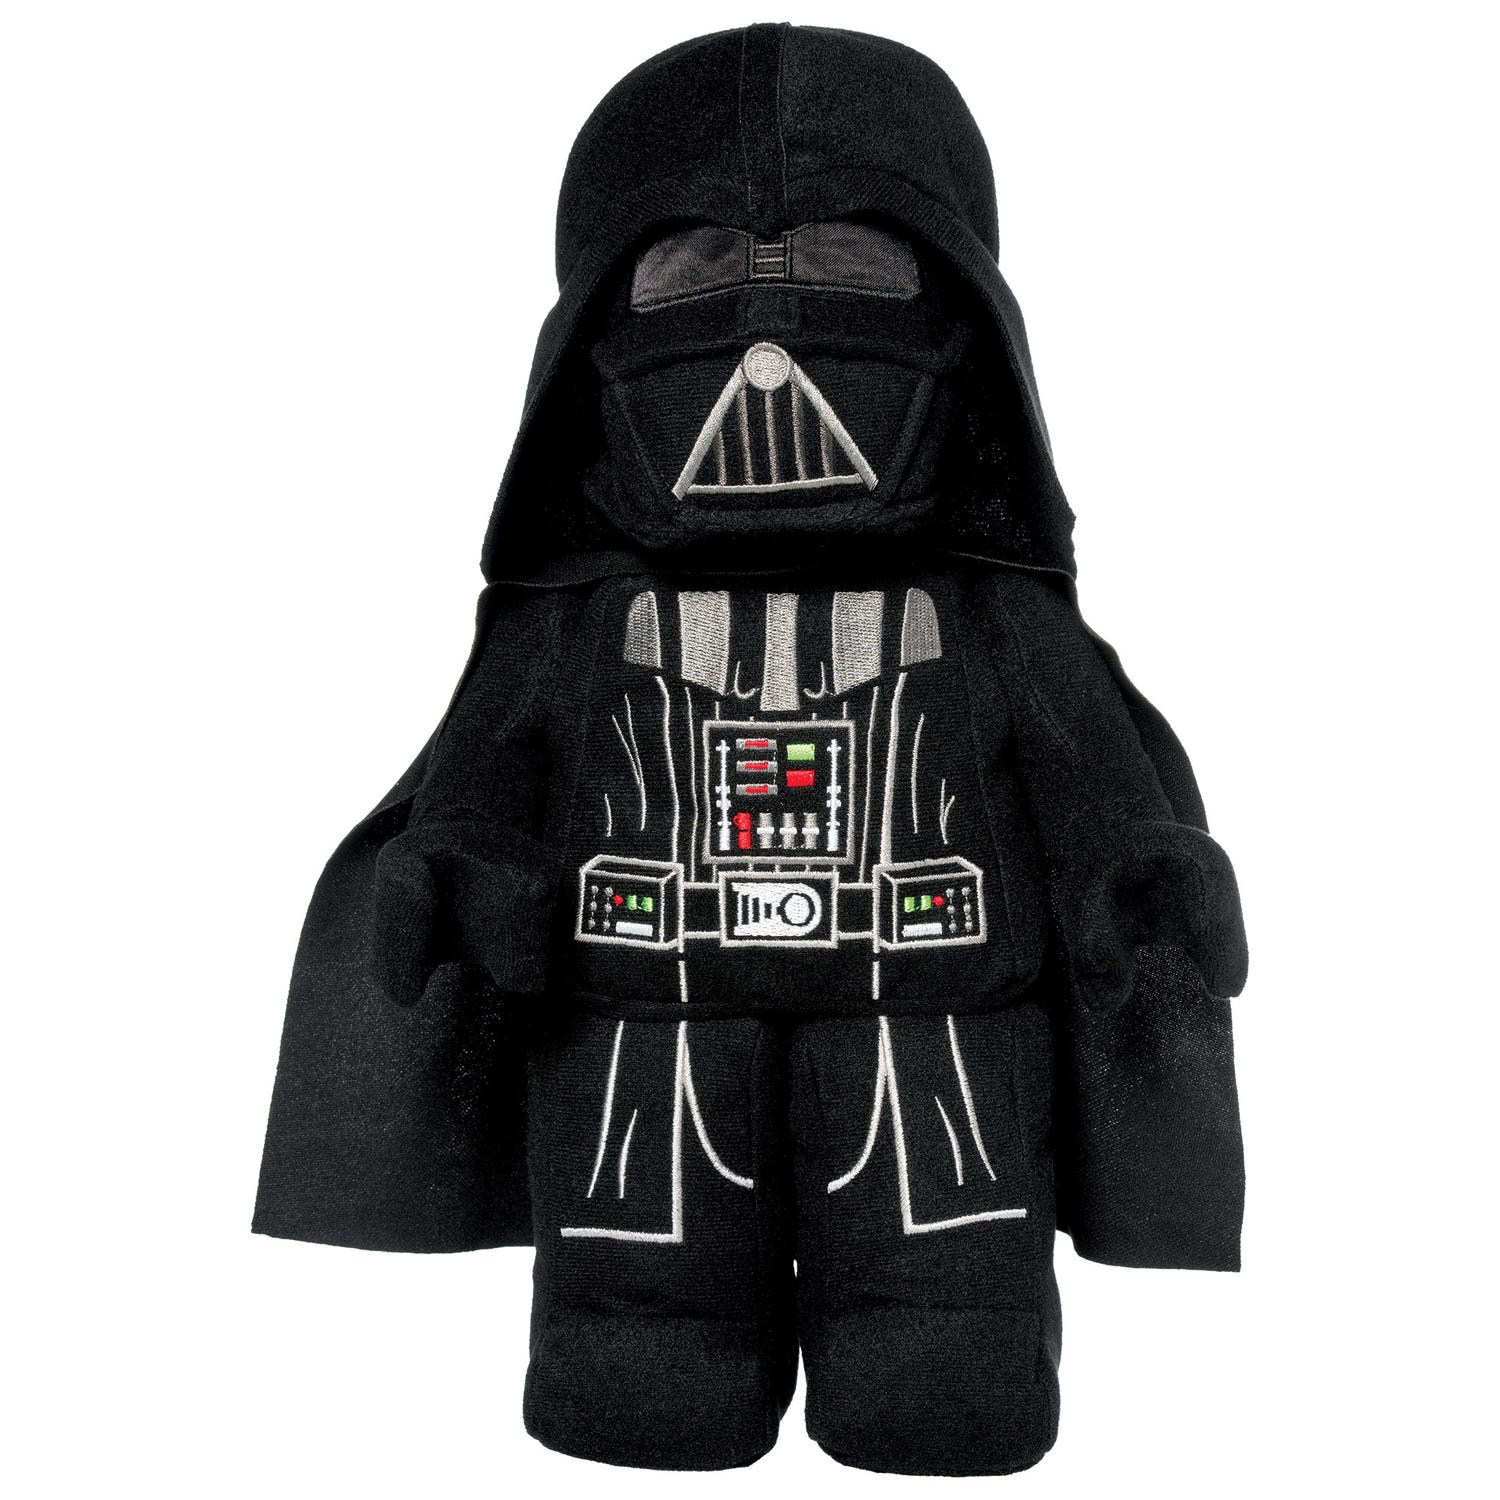 Darth Vader™ Plush 5007136 | Star Wars™ | Buy online at the US